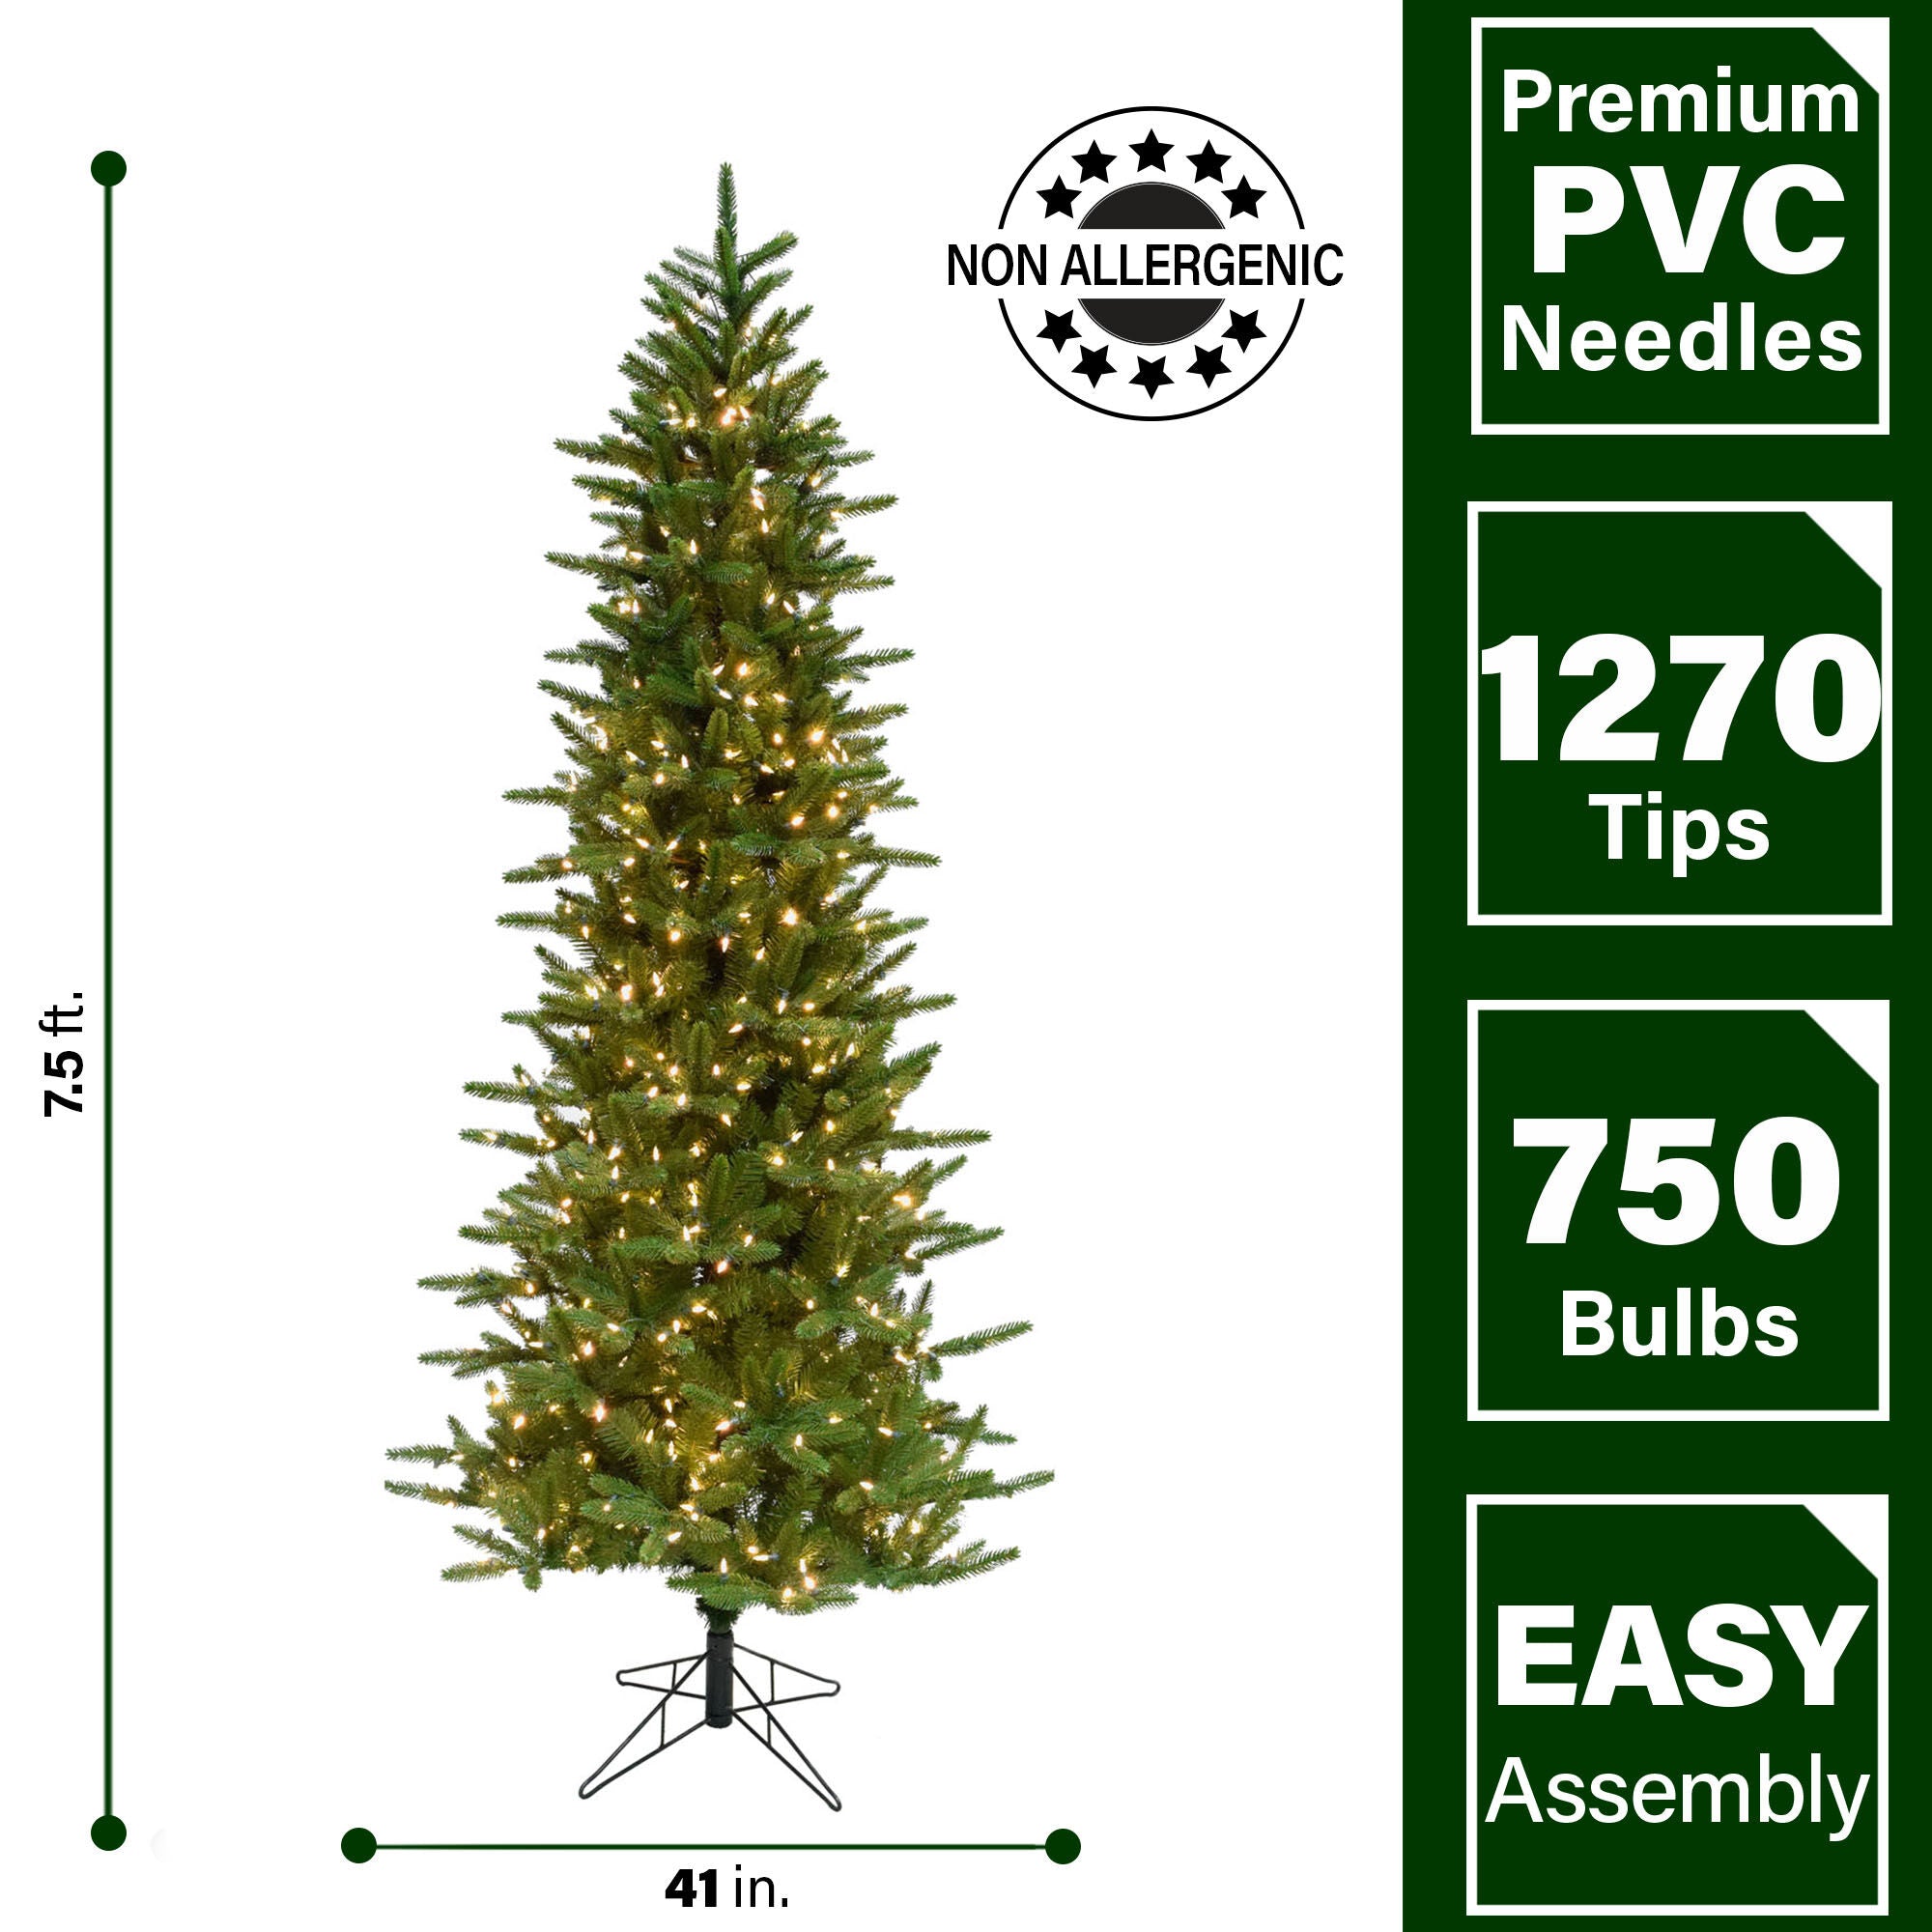 Fraser Hill Farm -  7.5 Ft. Carmel Pine Slim Artificial Christmas Tree with Warm White LED String Lighting